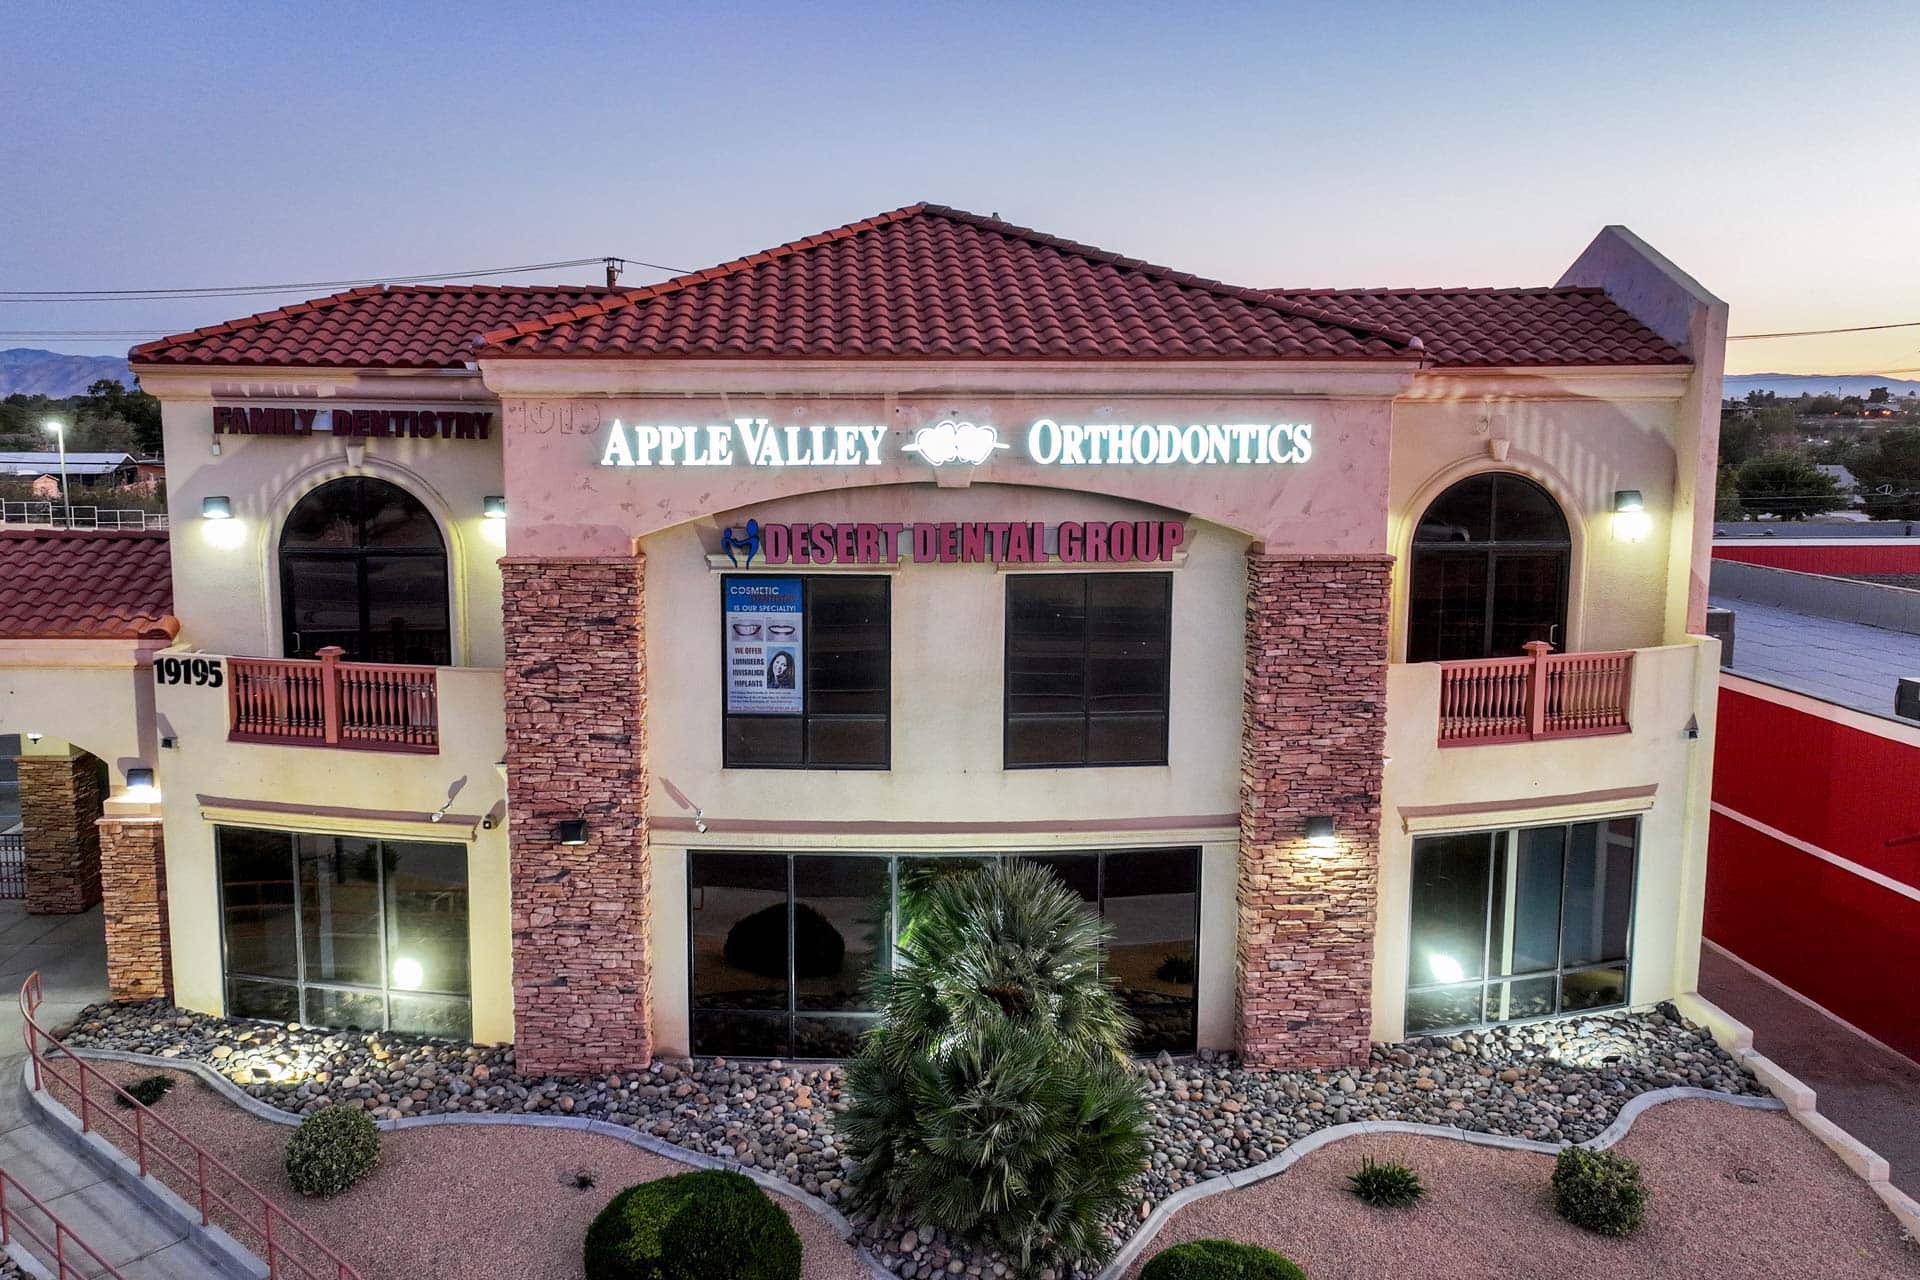 Best Orthodontist in Apple Valley, CA - Braces & Invisalign Provider